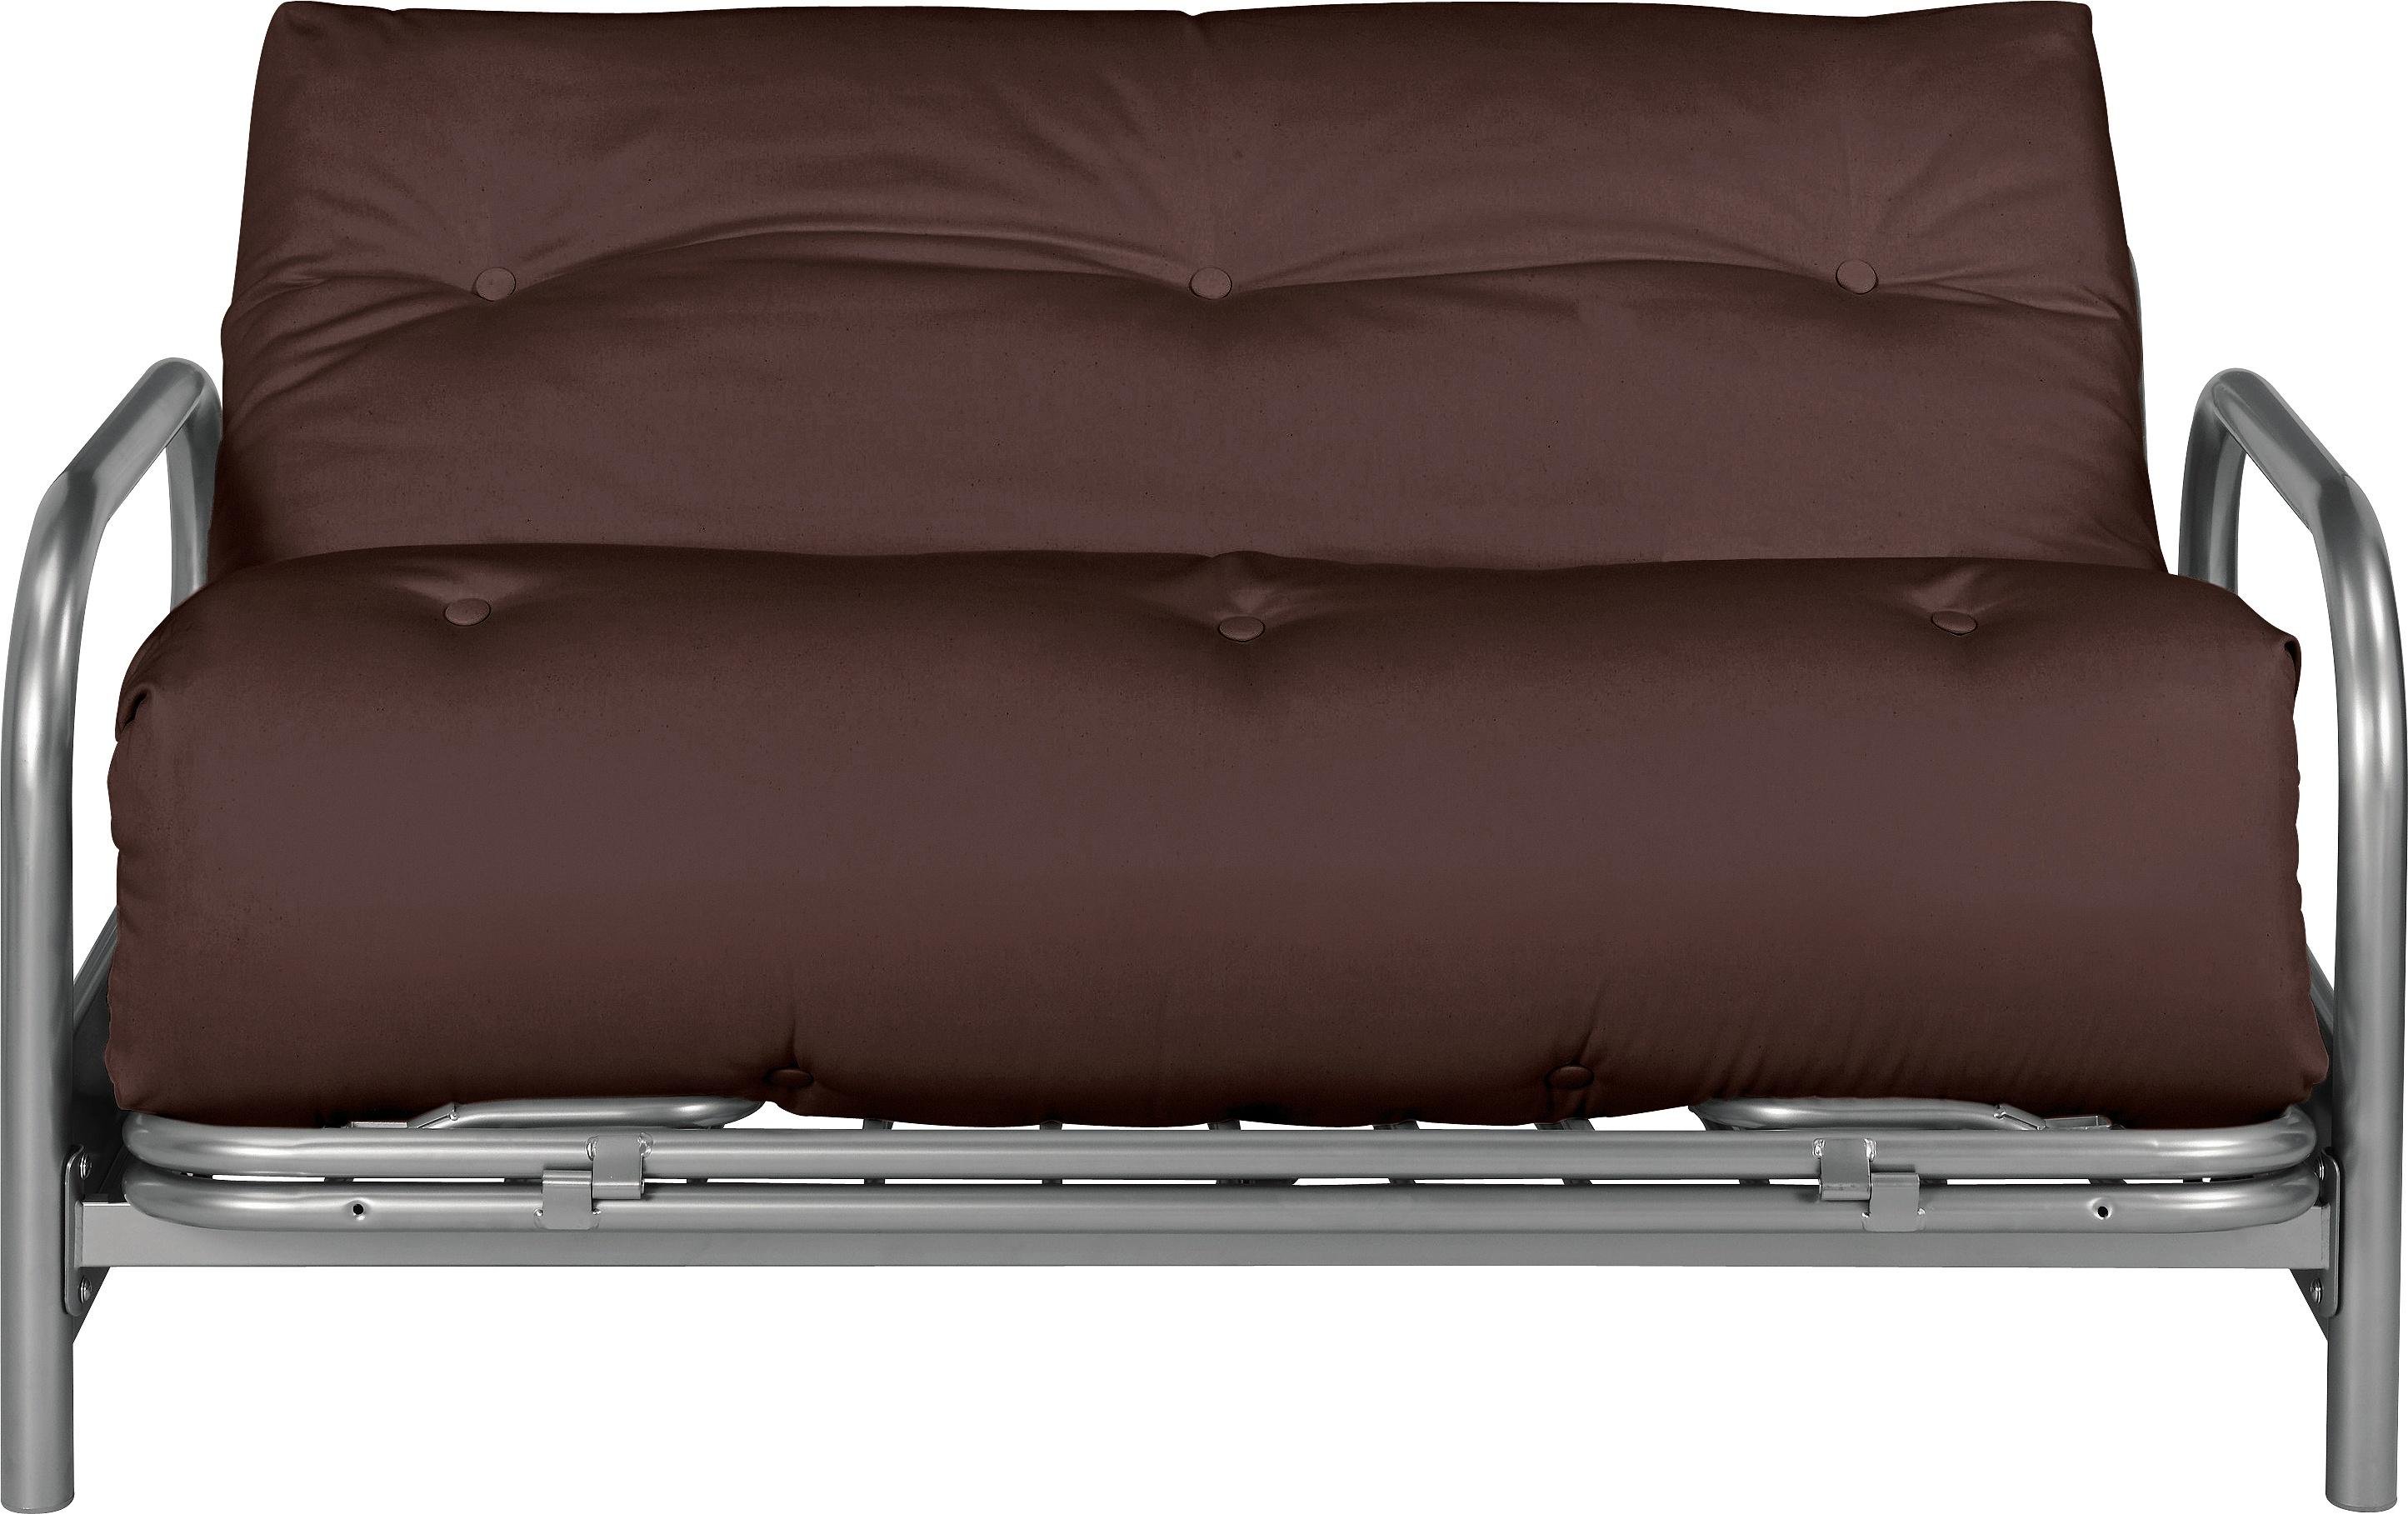 Argos Home Mexico 2 Seater Futon Sofa Bed - Chocolate